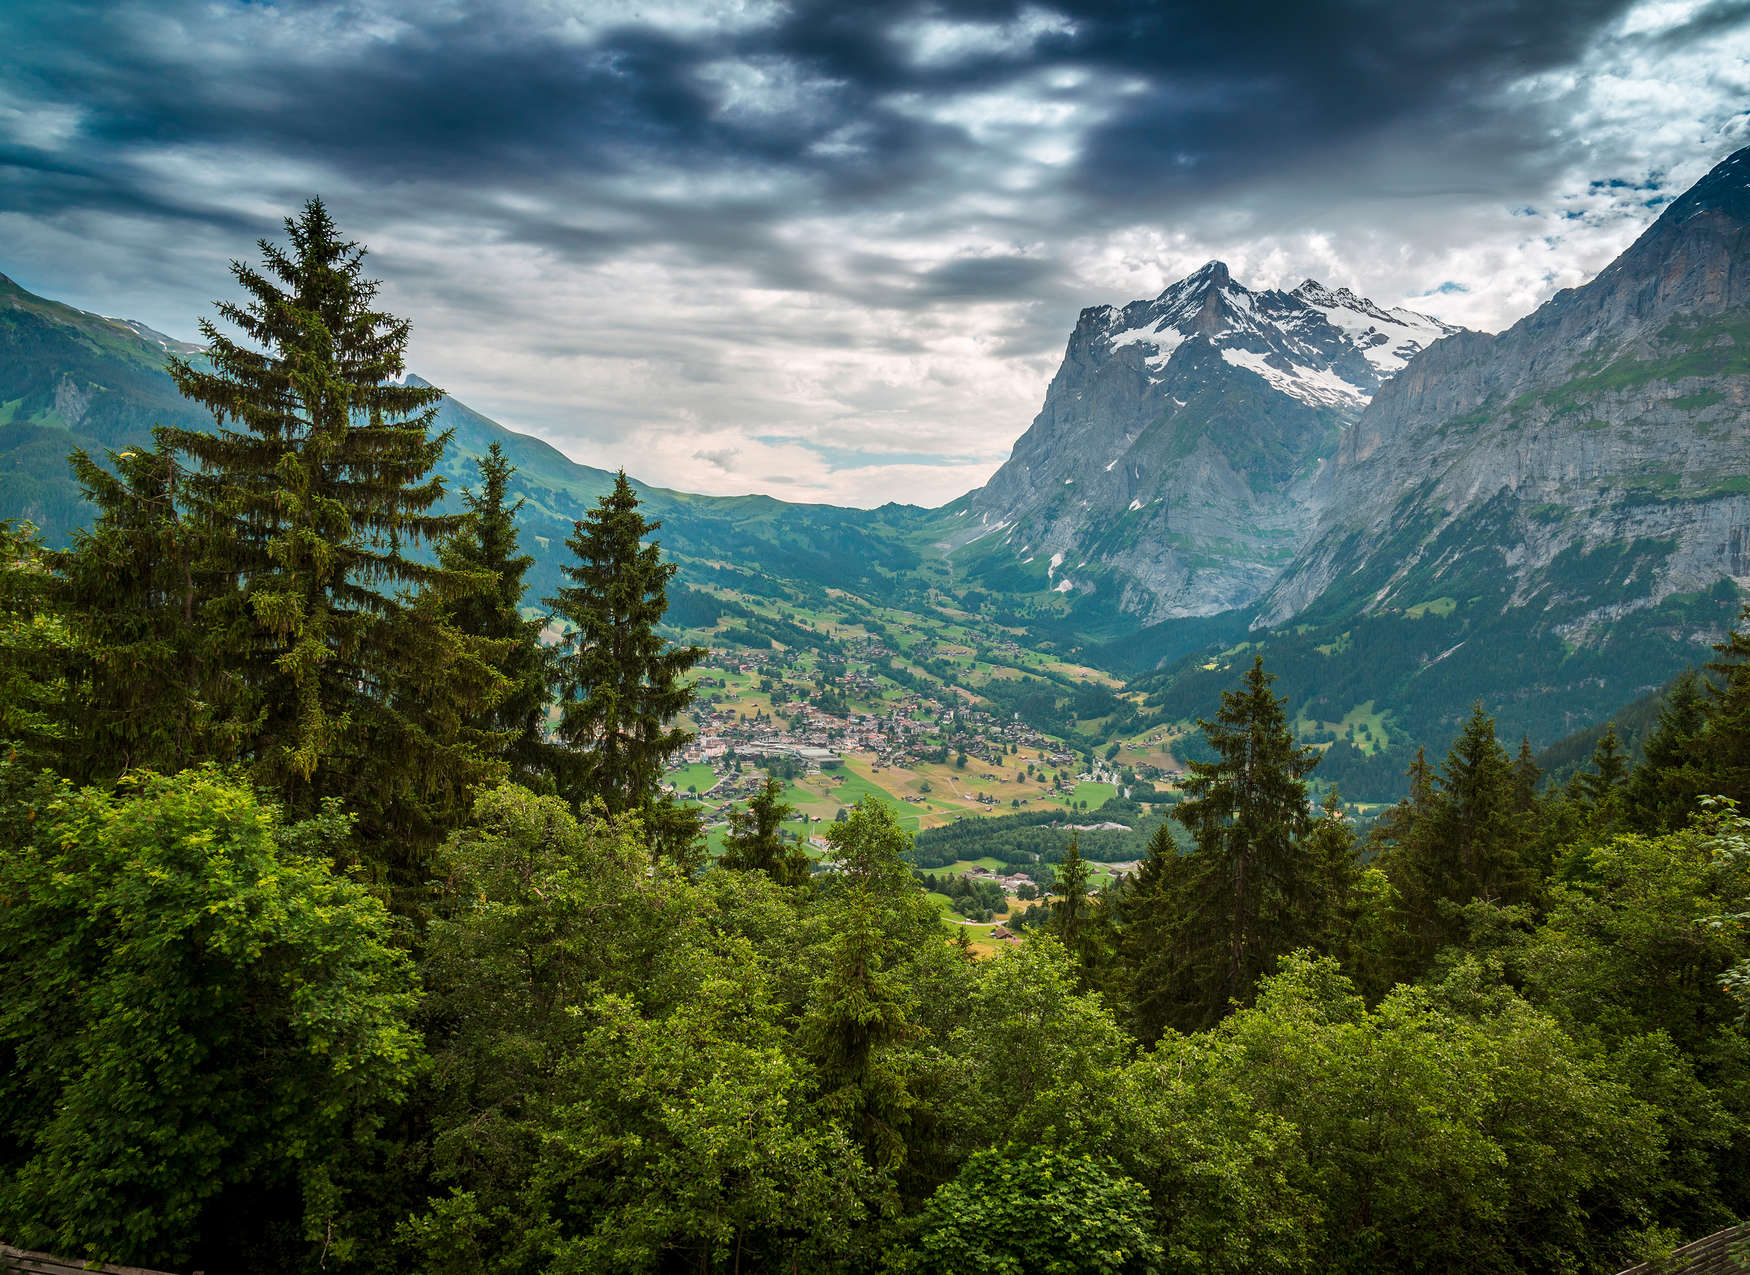             Motivtapete mit Berglandschaft – Grün, Grau, Blau
        